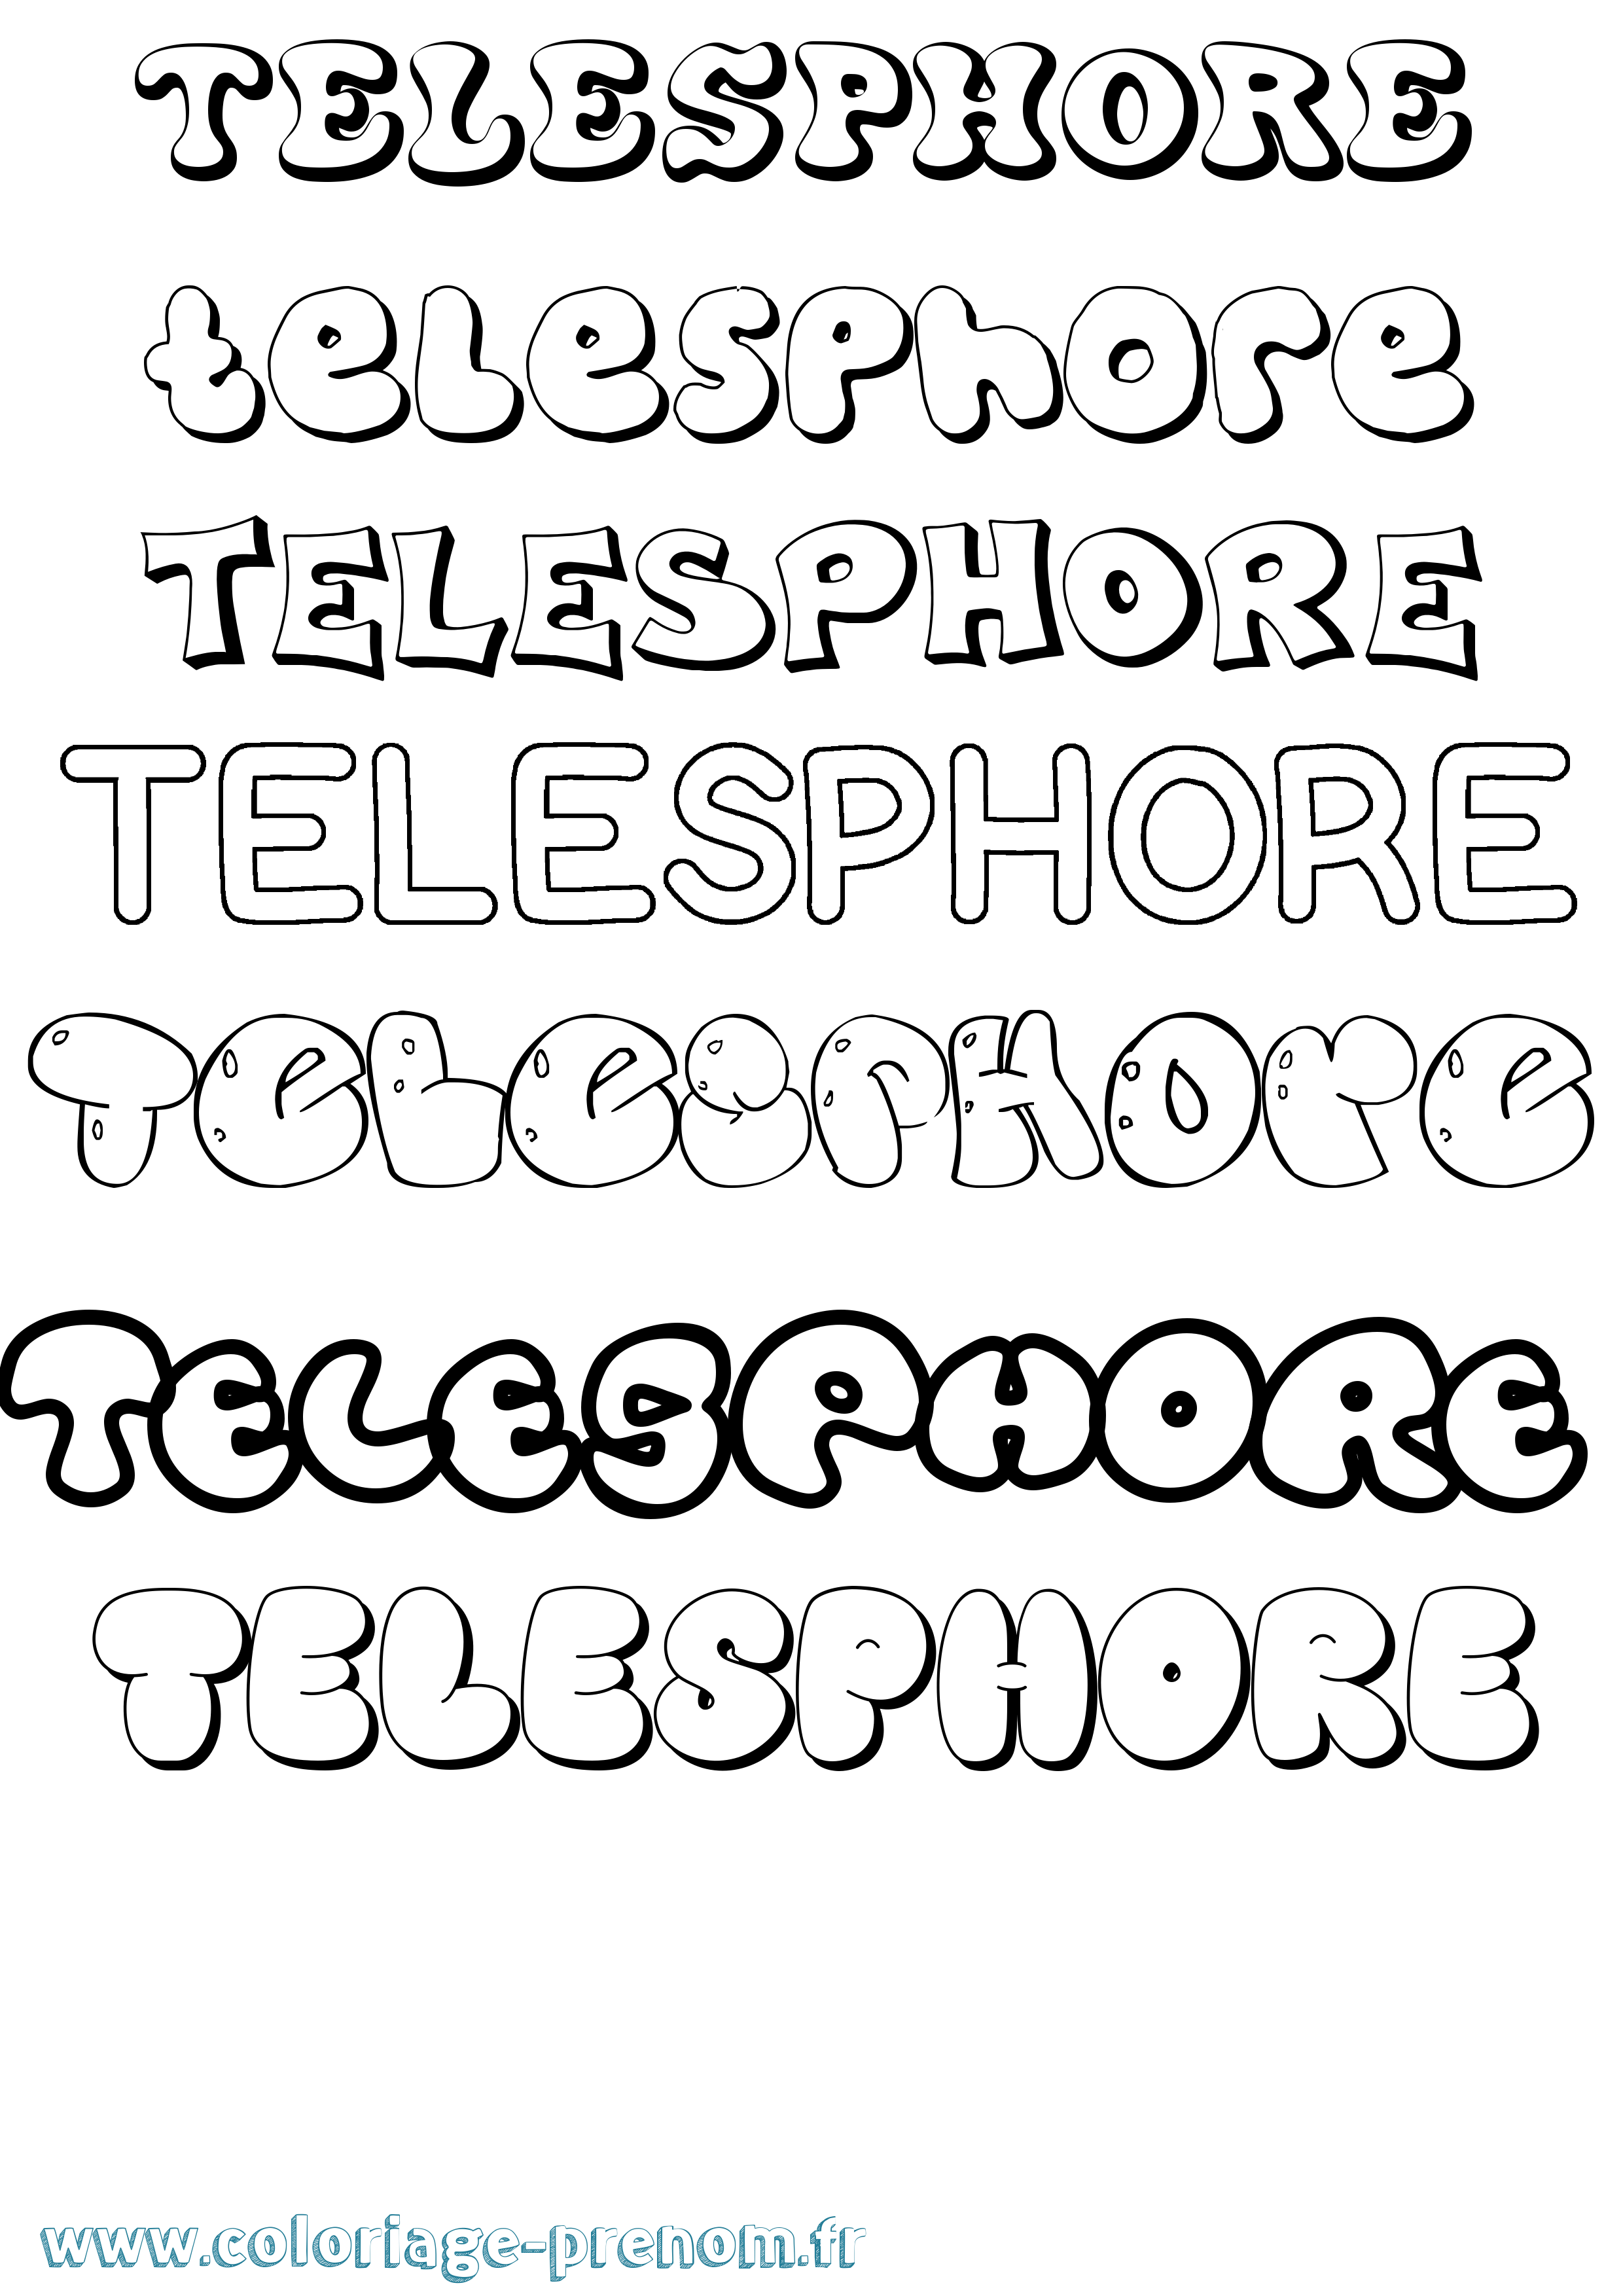 Coloriage prénom Telesphore Bubble